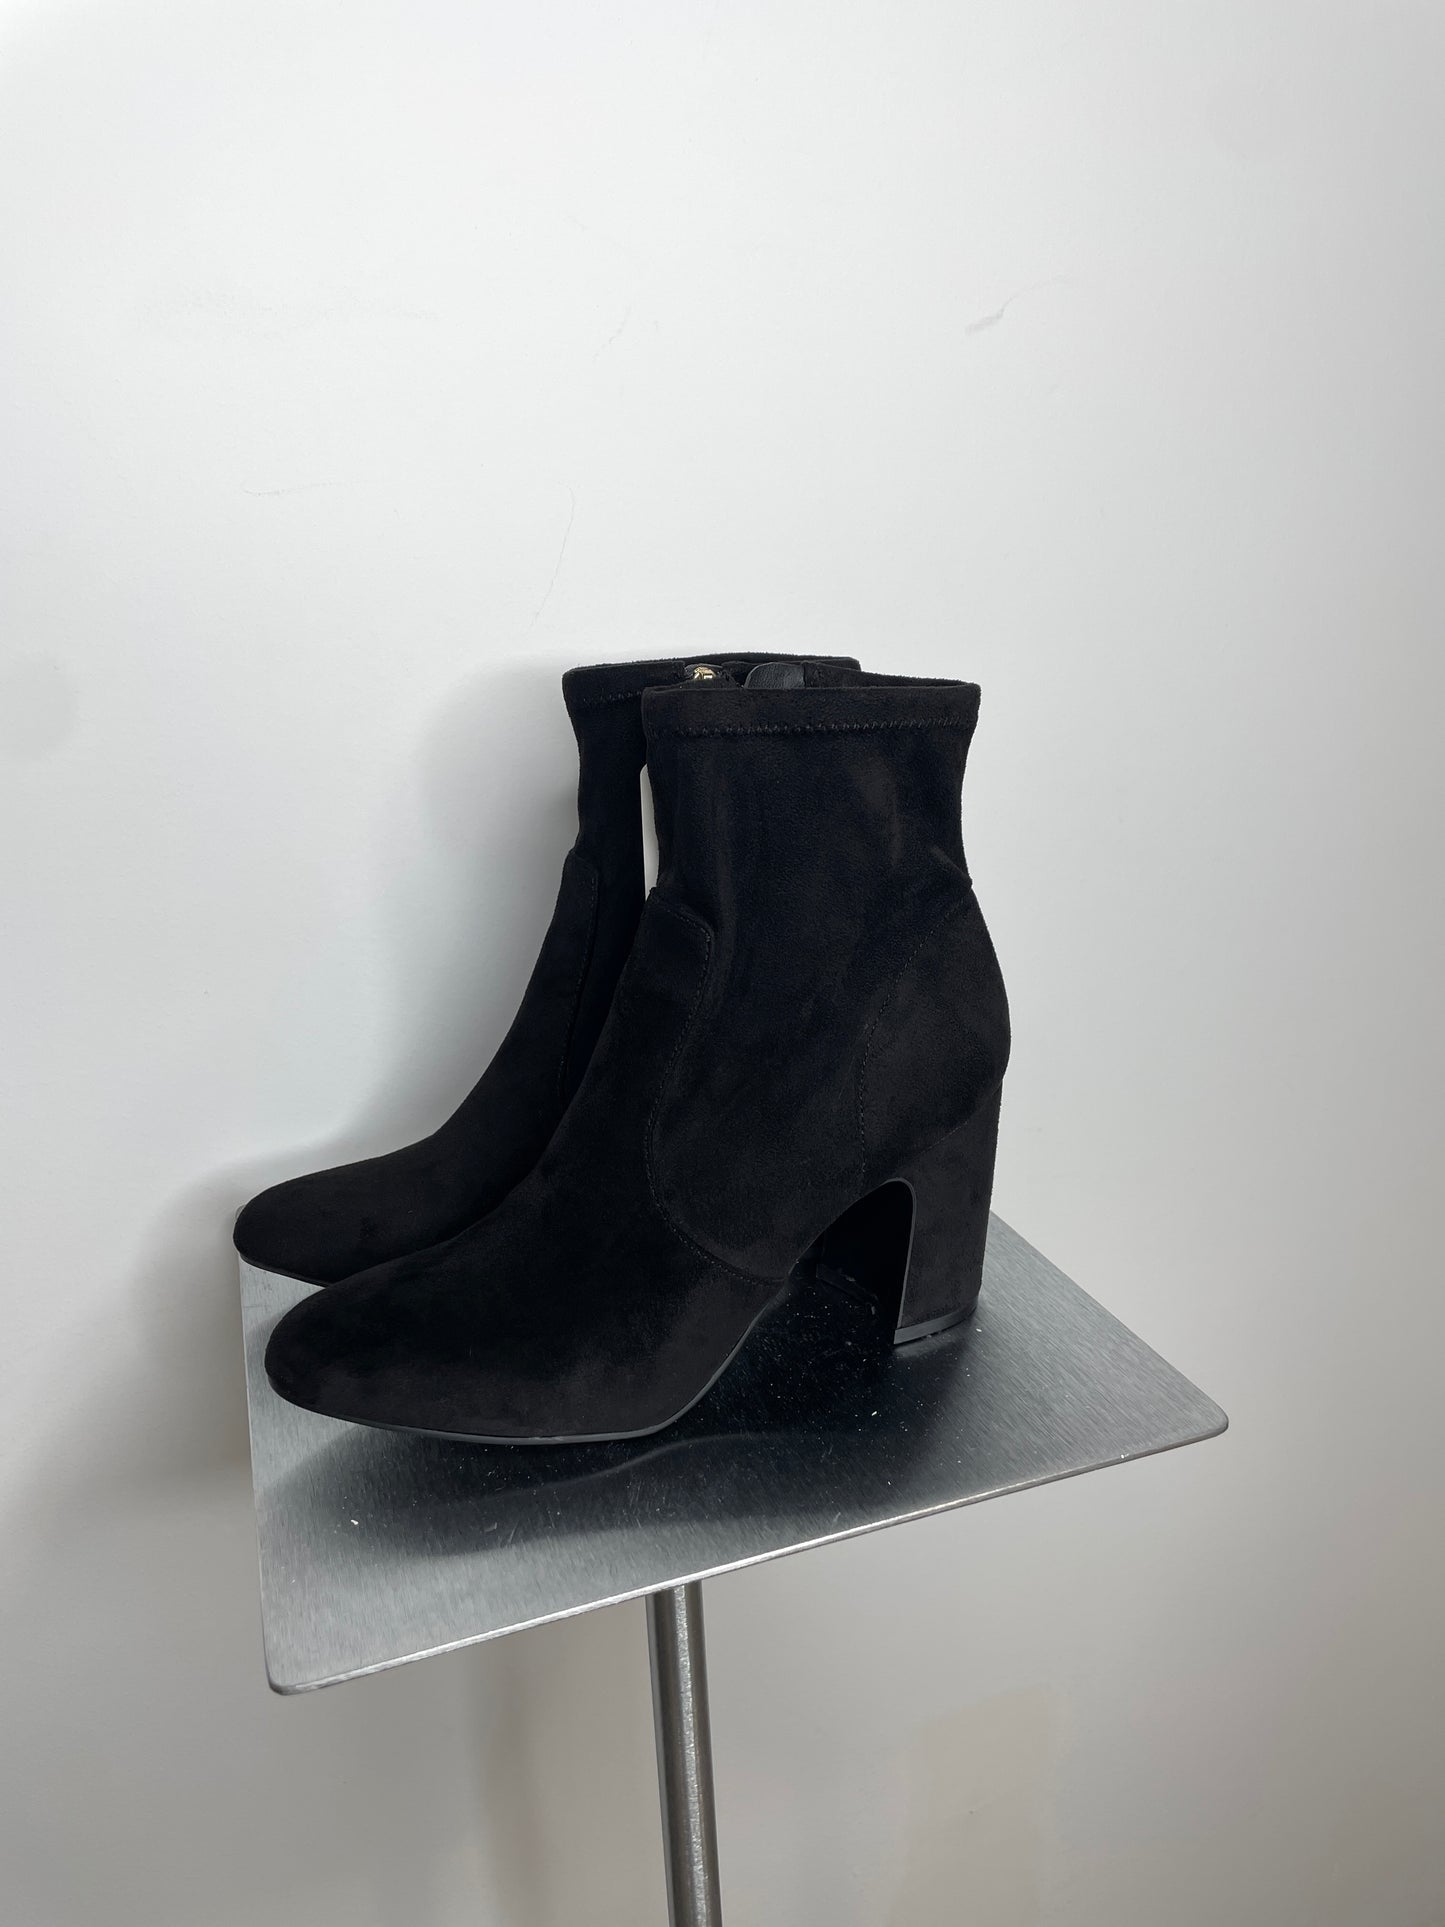 Black suede heeled booties